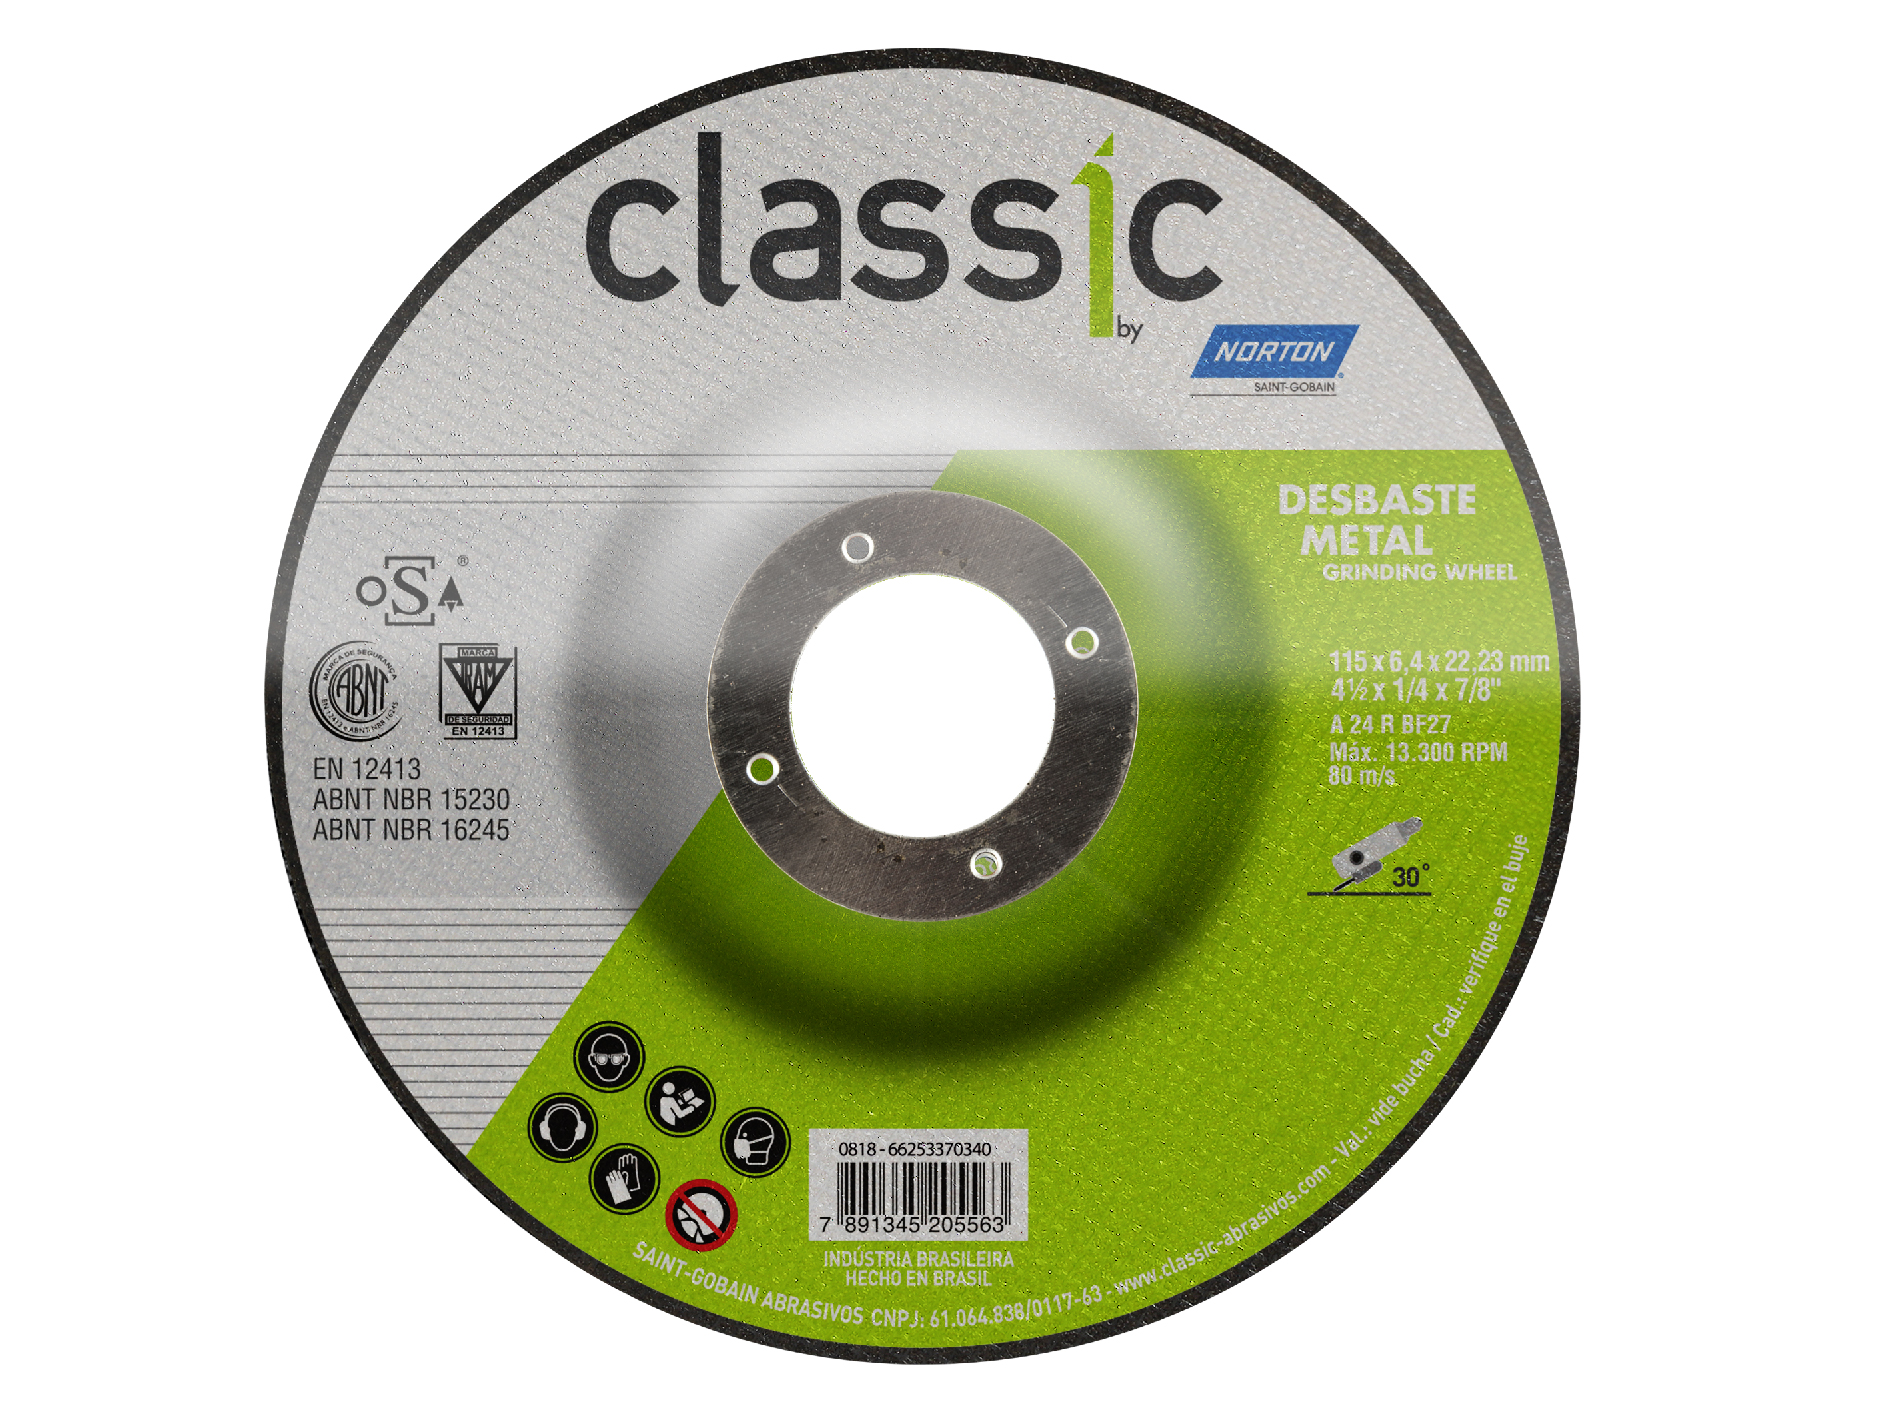  DISCO DESBASTE 10UN METAL CLASSIC 115X6.4X22.23MM 